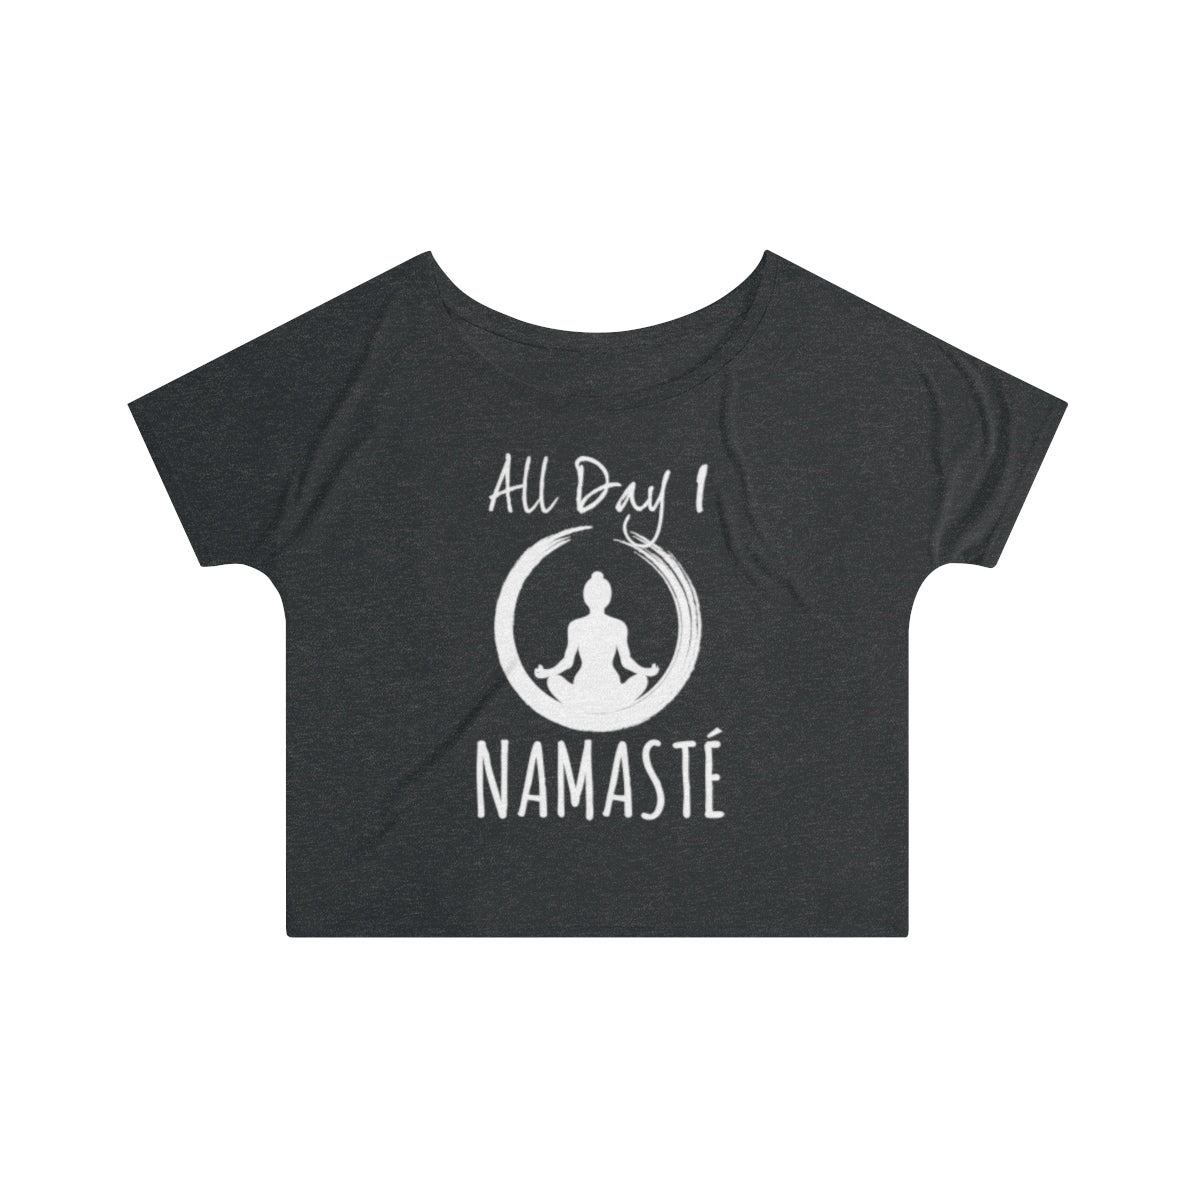 All Day I Namaste Yoga Slouchy Top